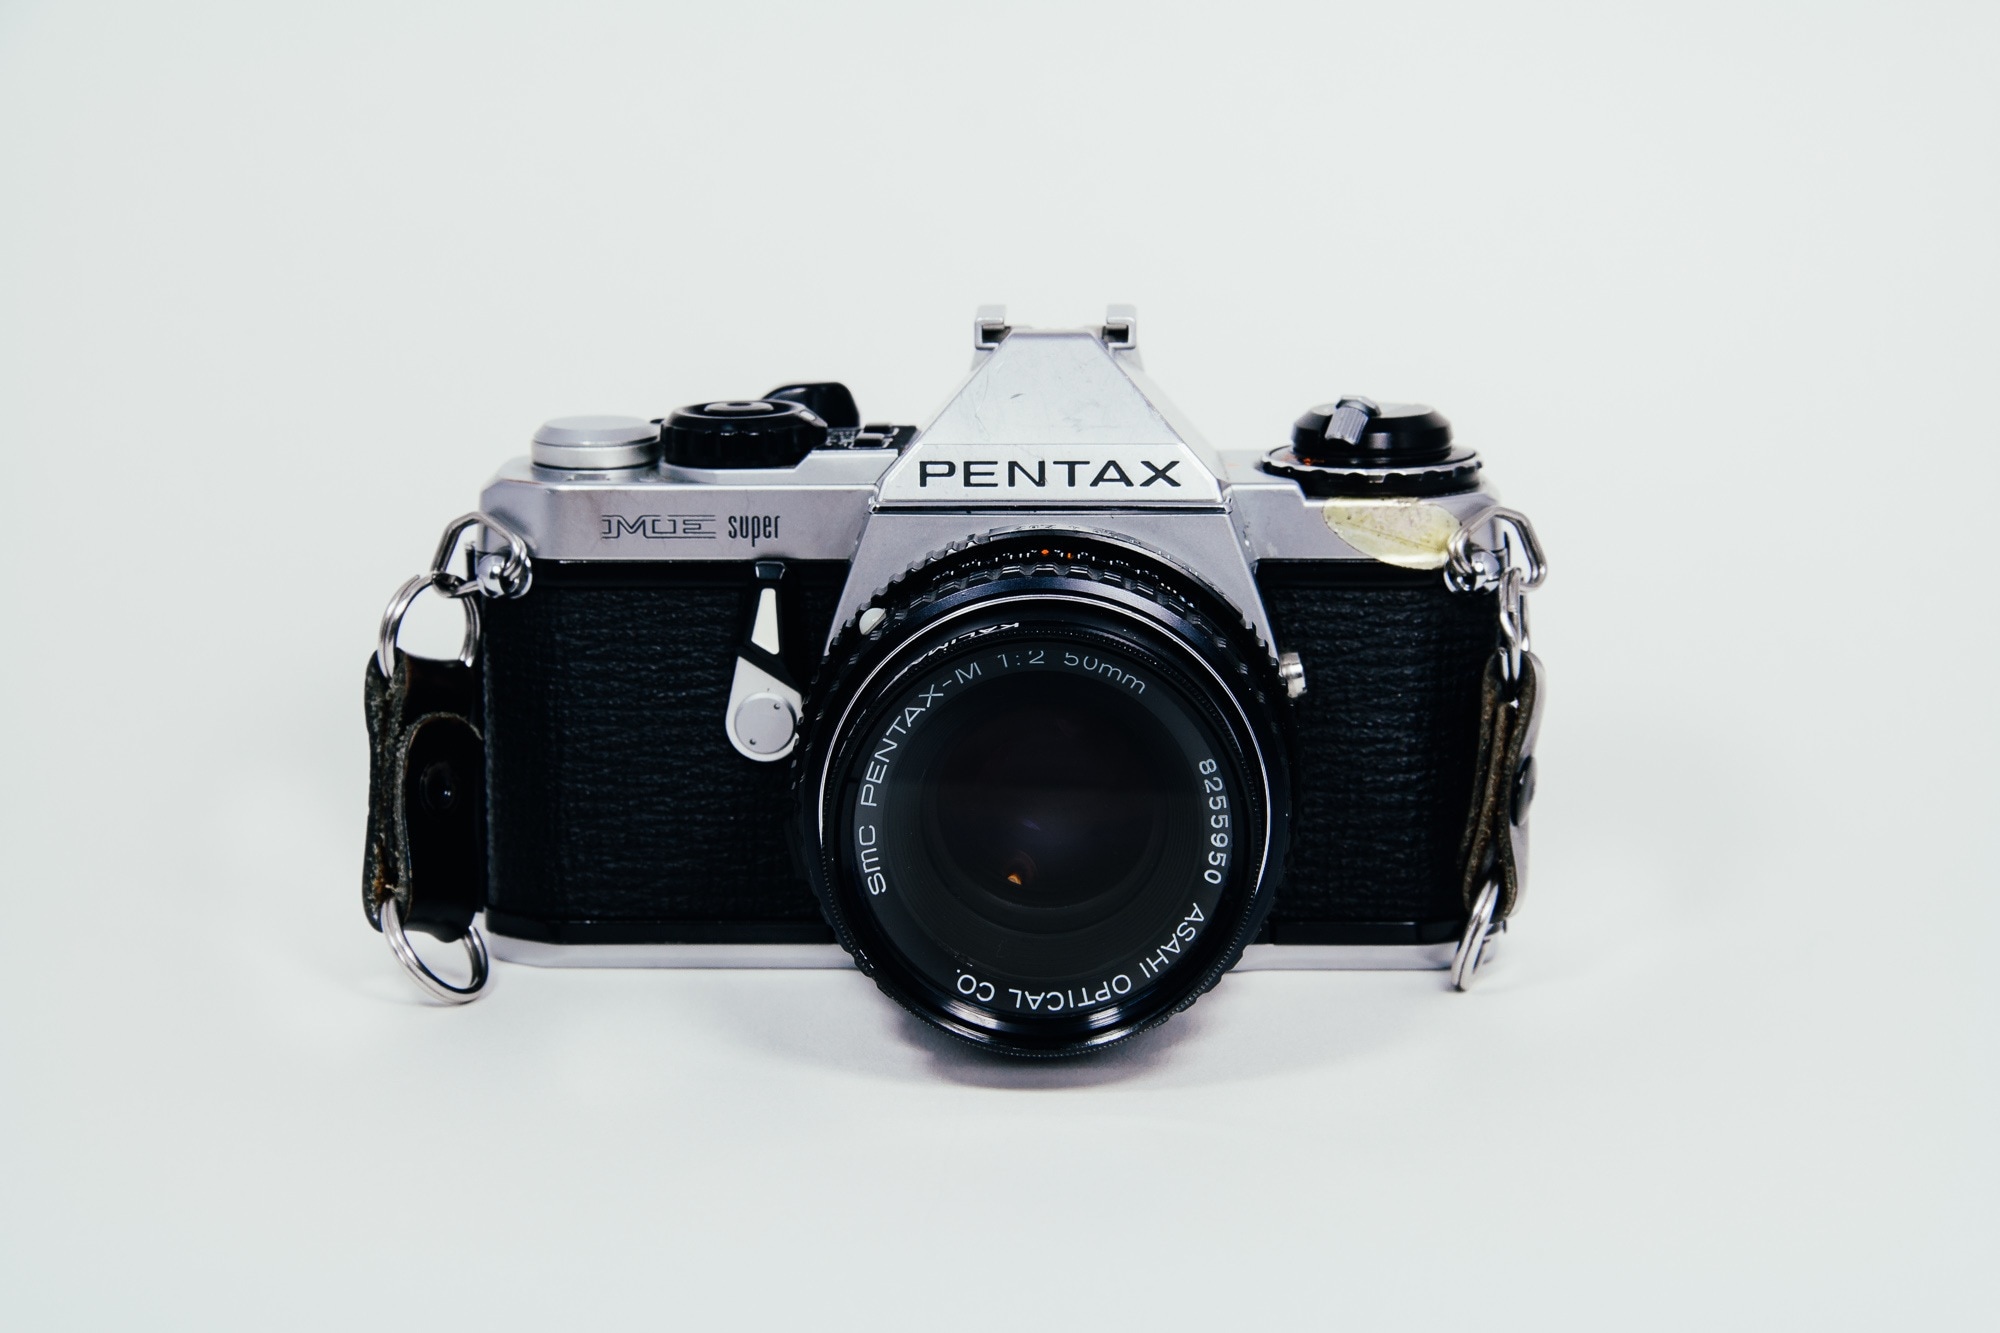 gray and black pentax dslr camera